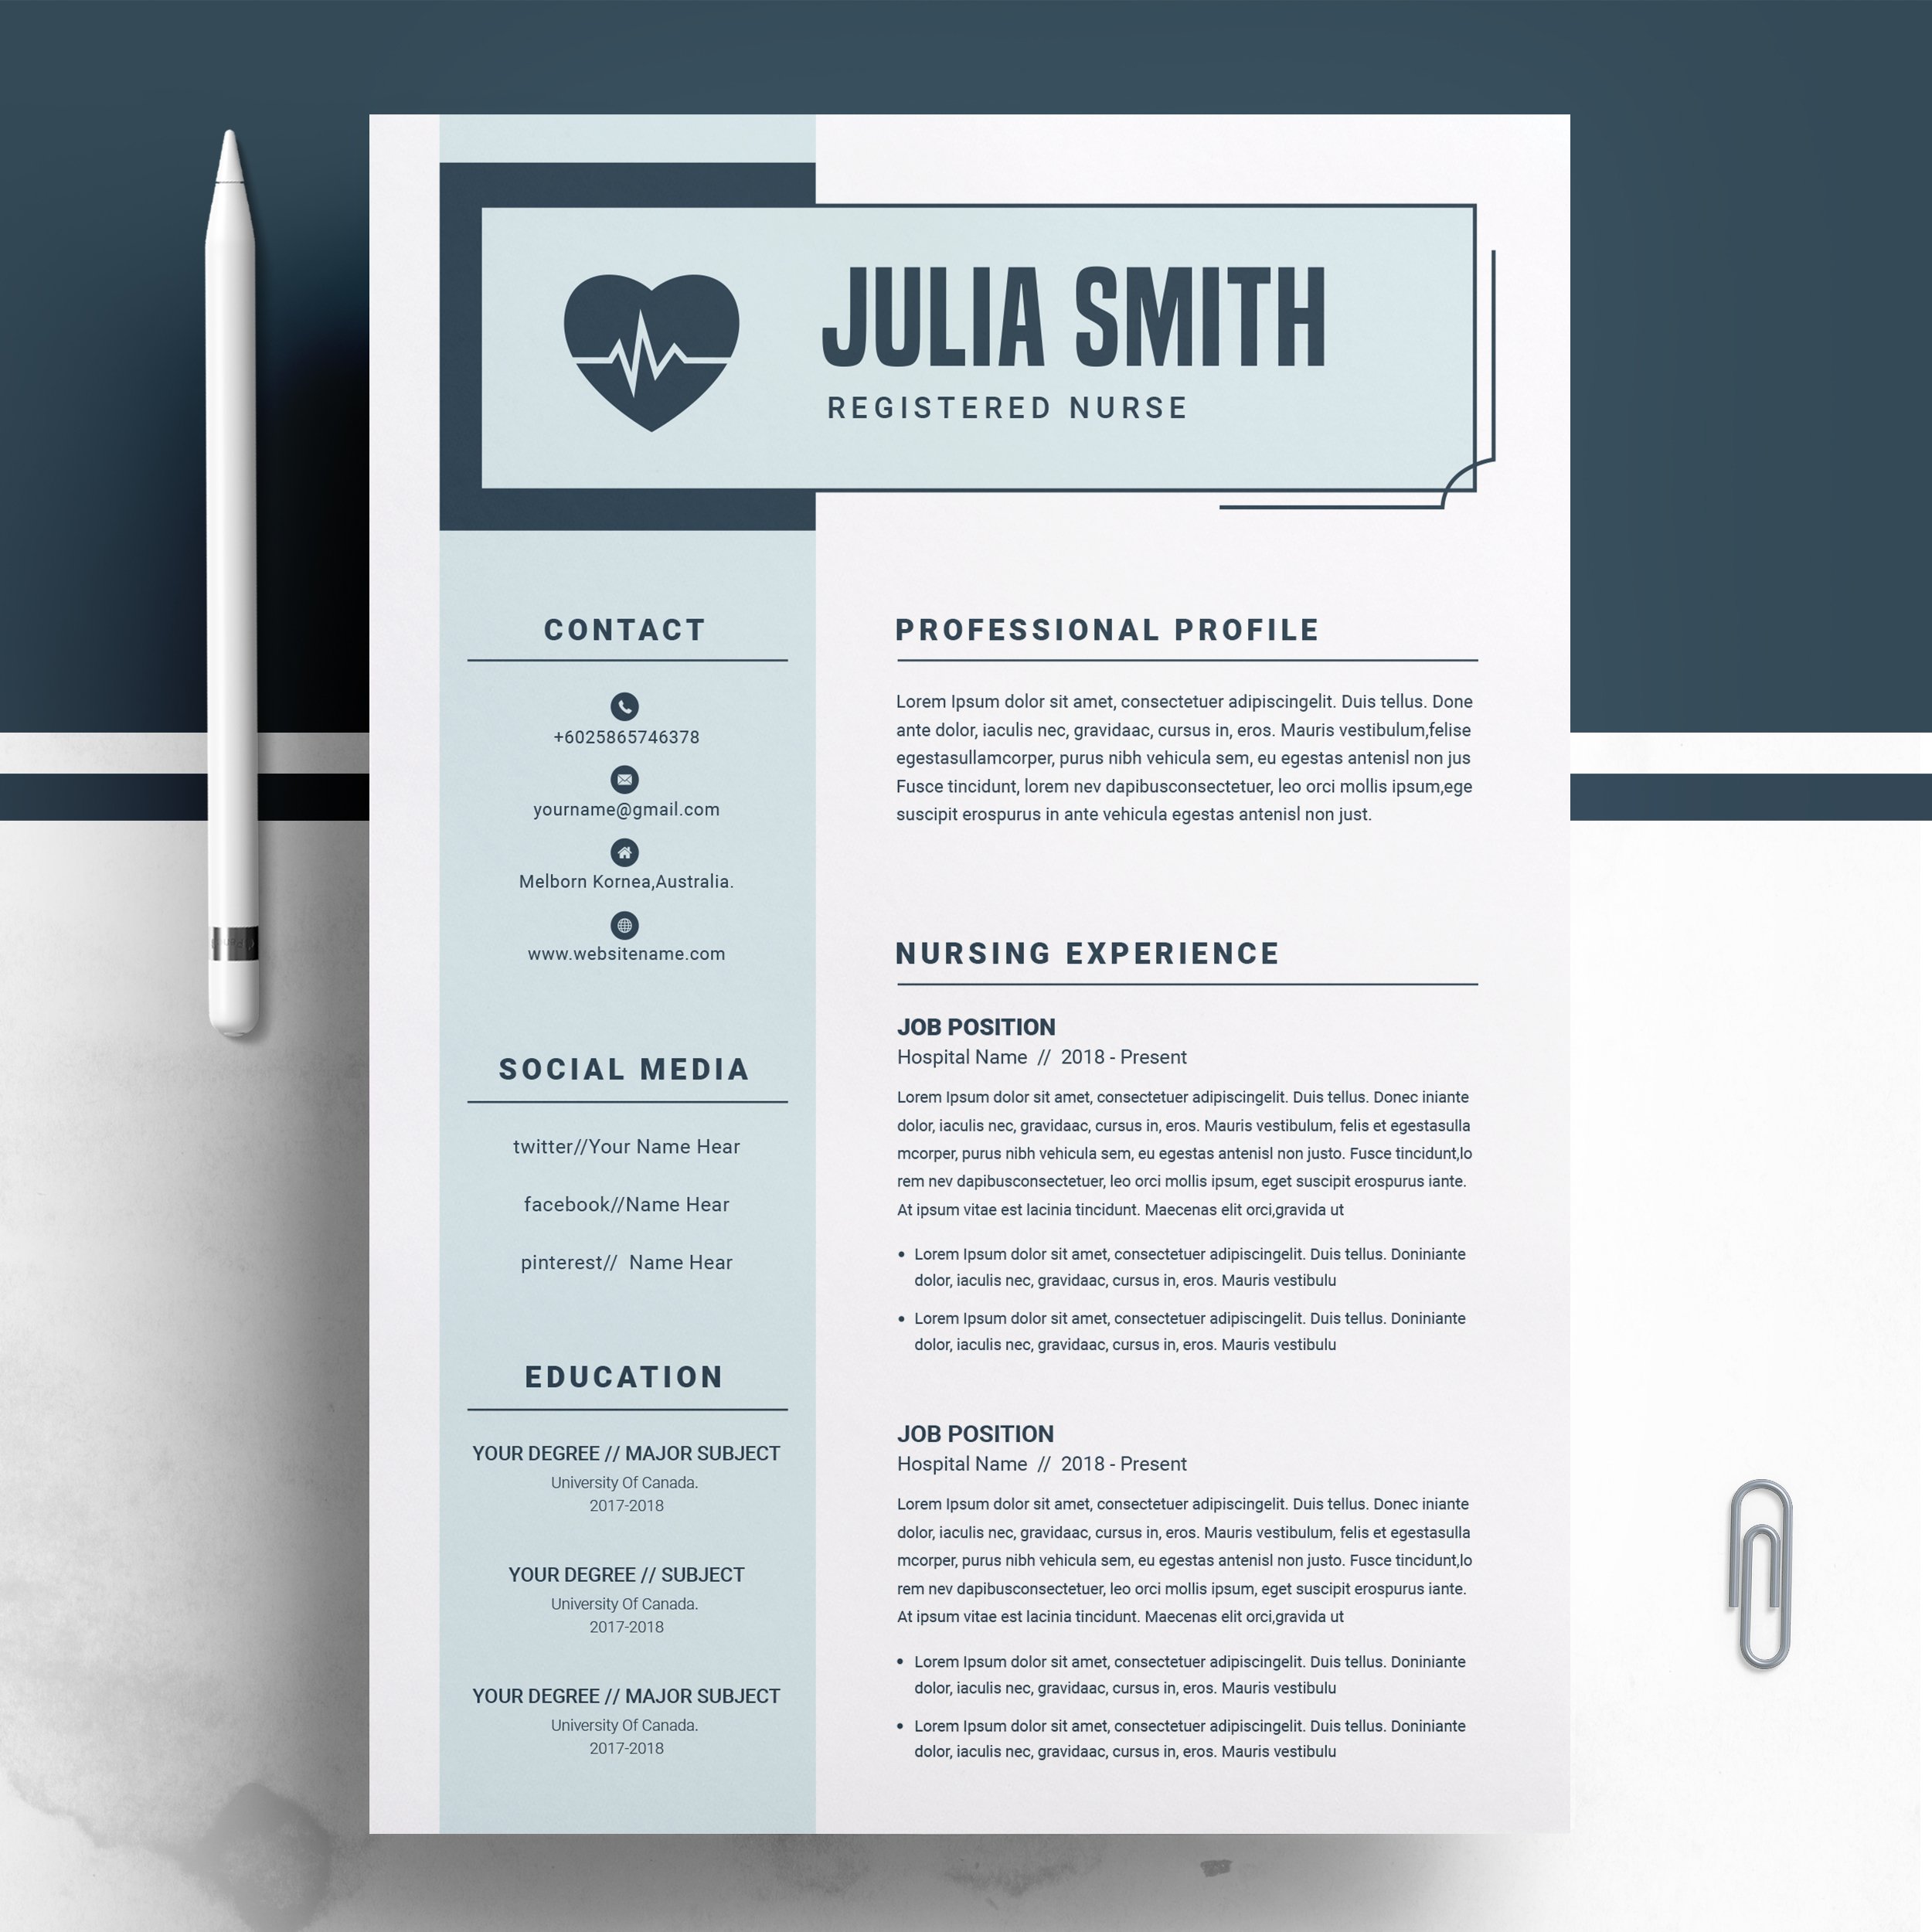 Nurse Resume/Medical Resume Template cover image.